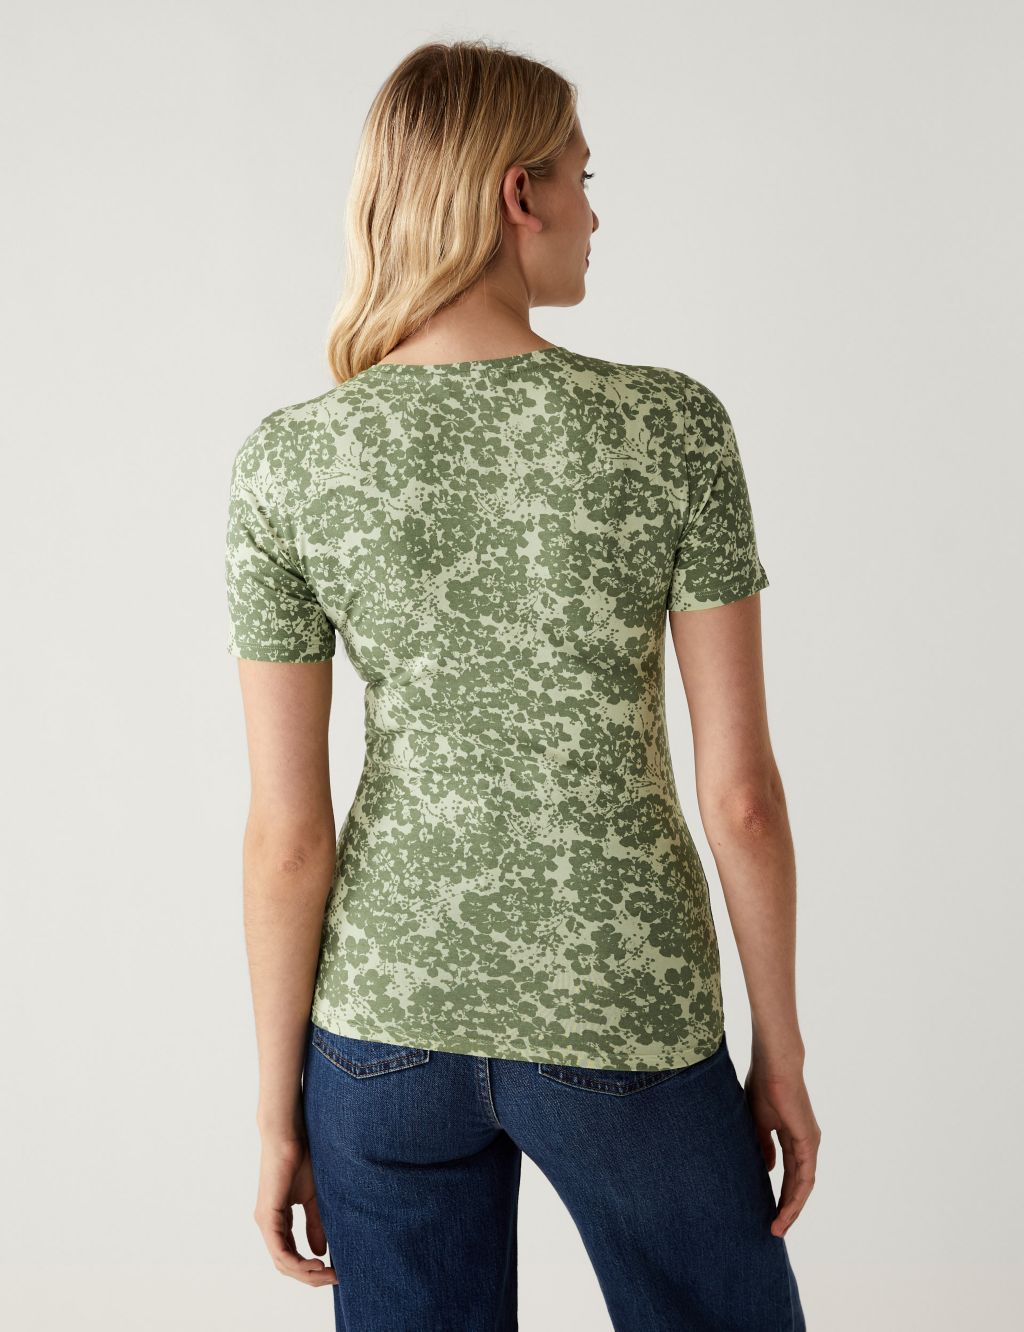 Cotton Rich Printed Slim Fit T-Shirt image 4